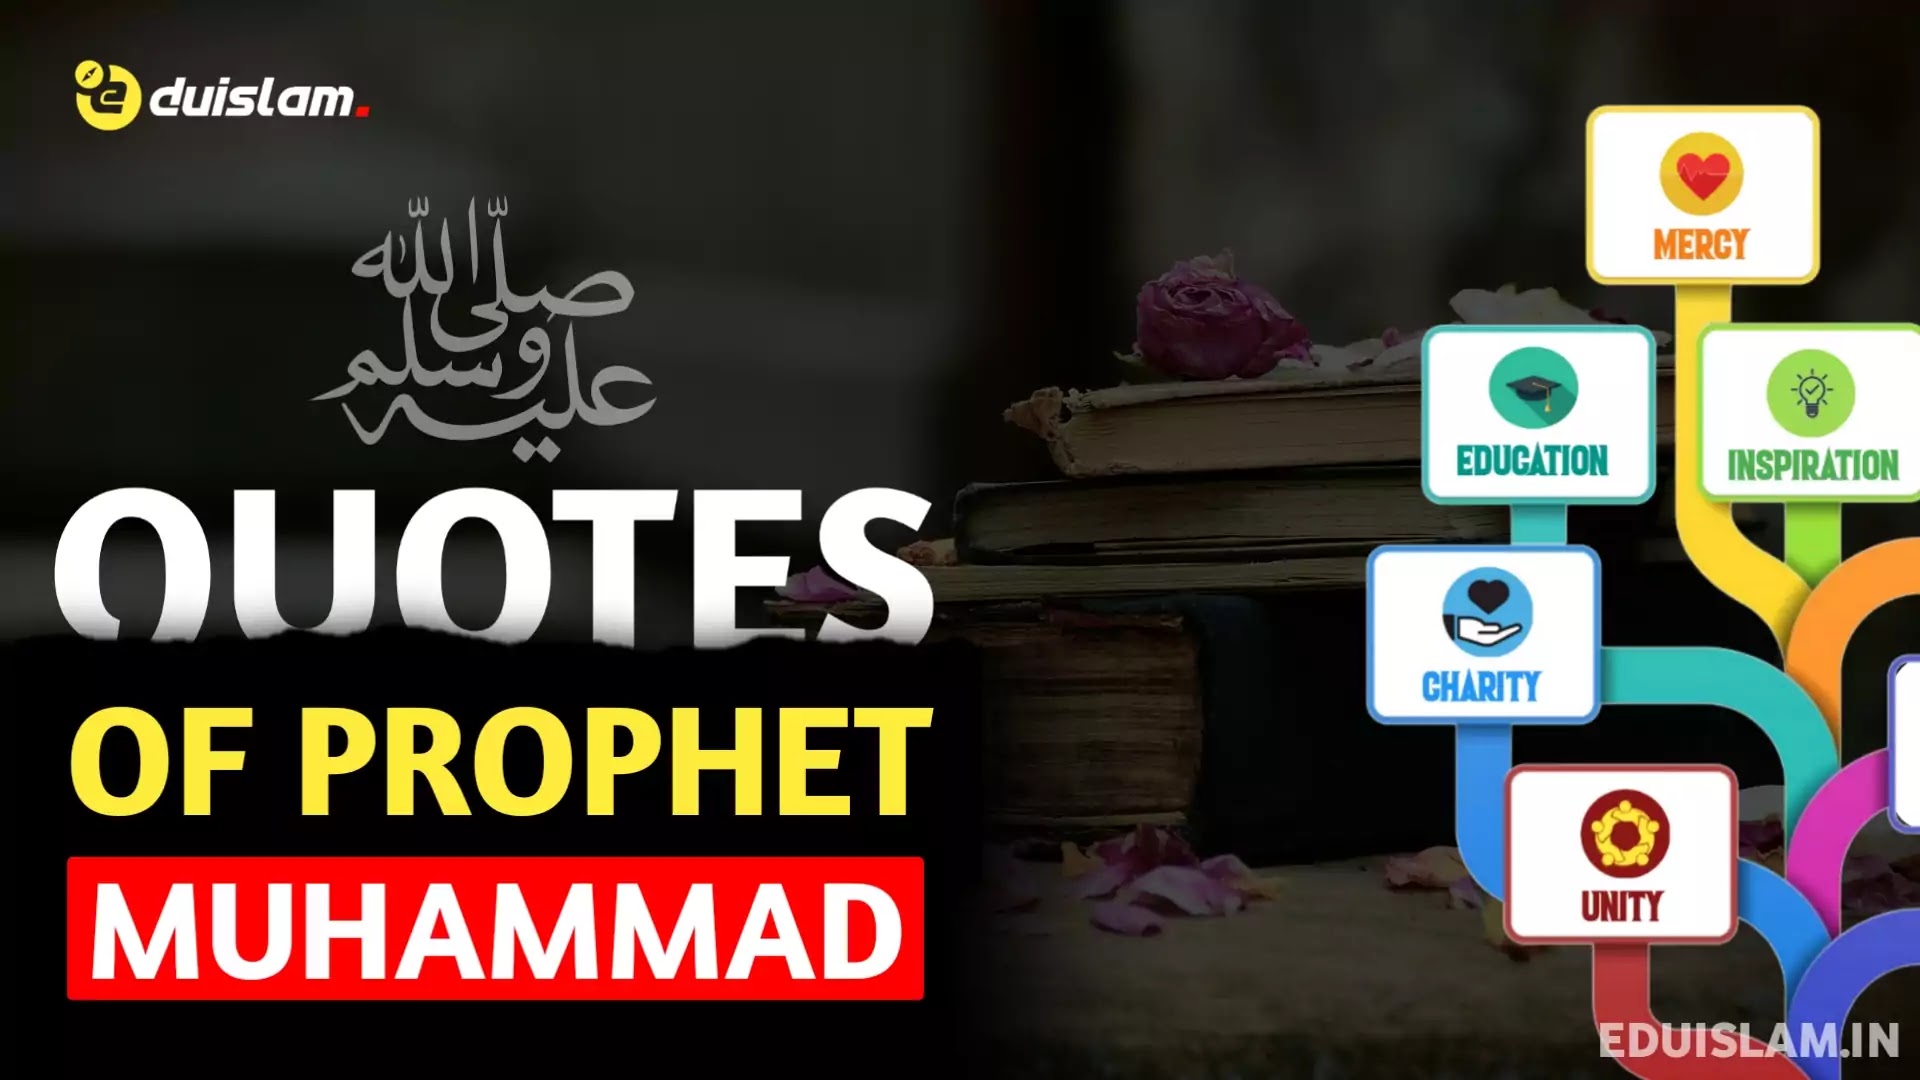 Prophet Muhammad quotes